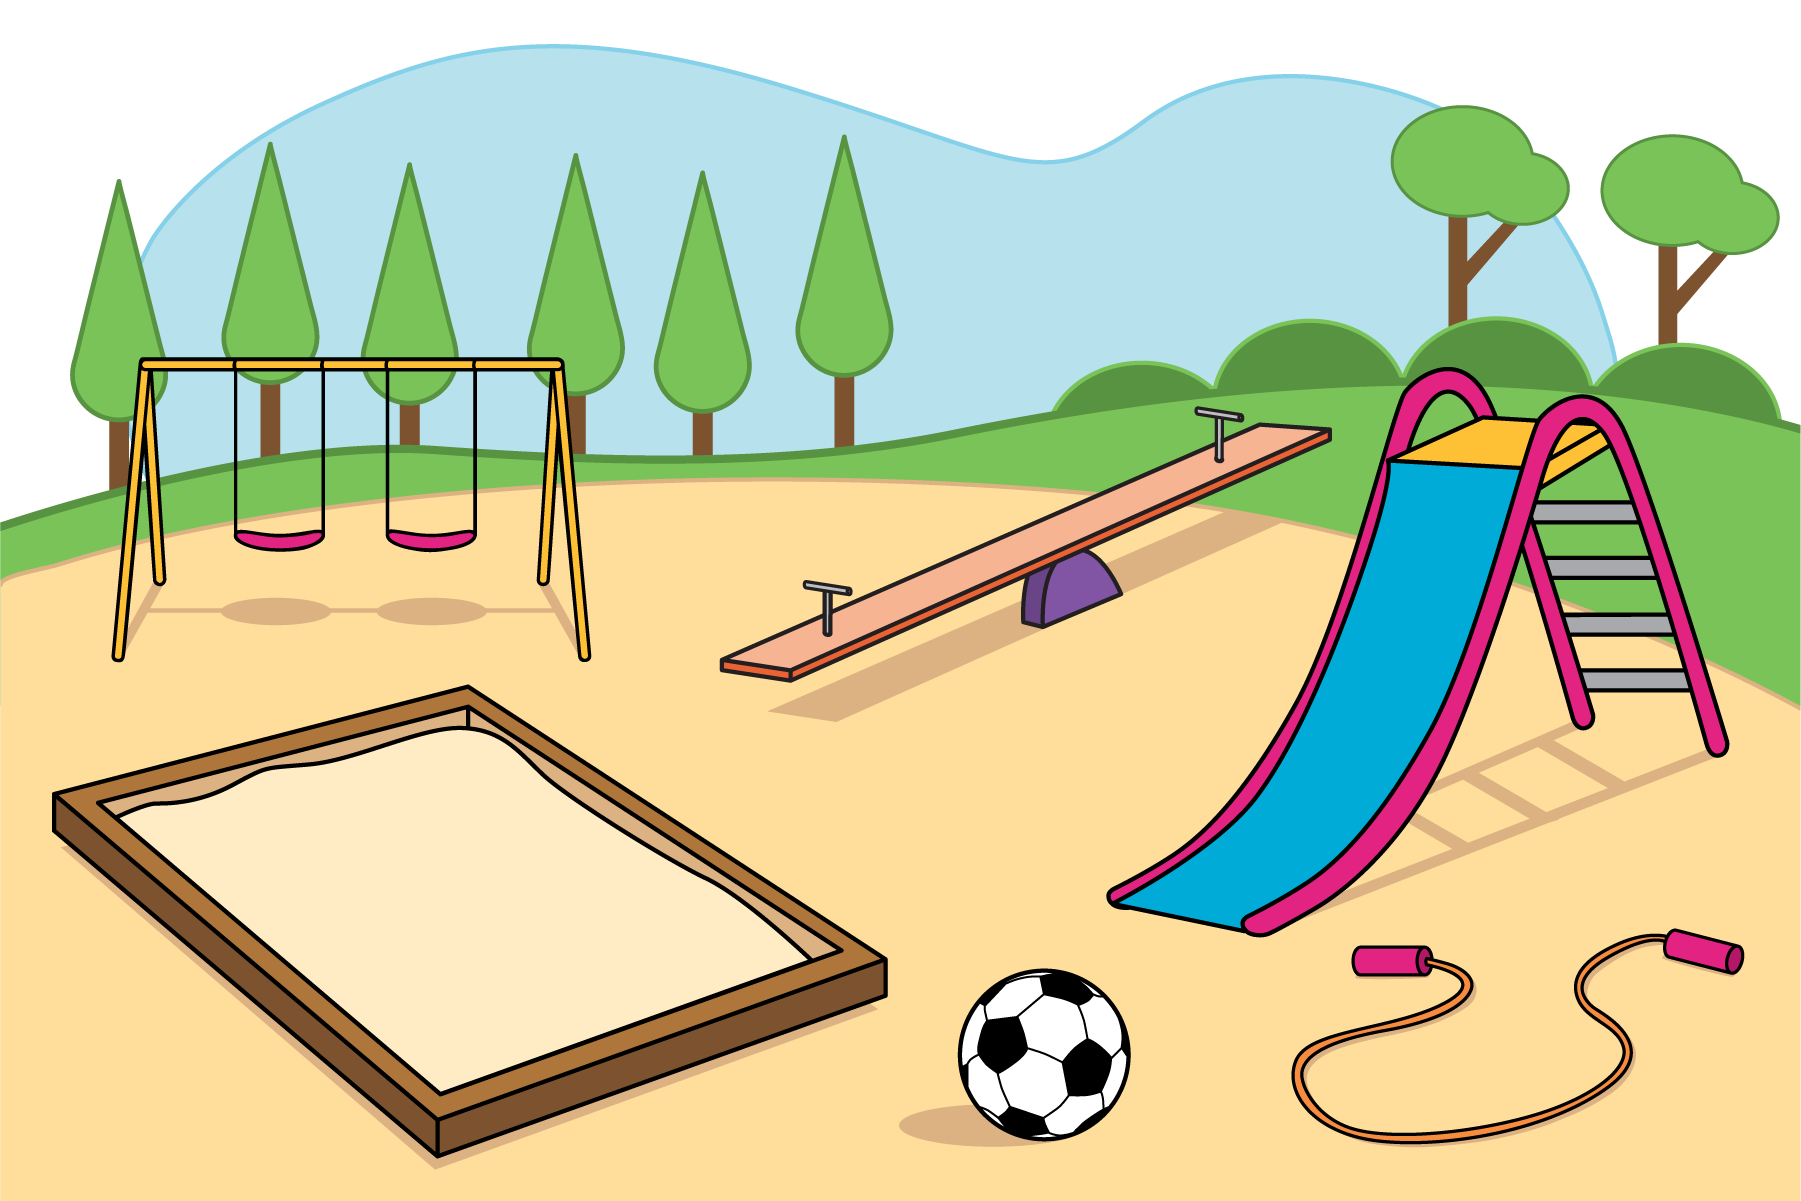 Playground. Swings. Sandbox. Seesaw. Slide. Soccer ball. Jump rope.